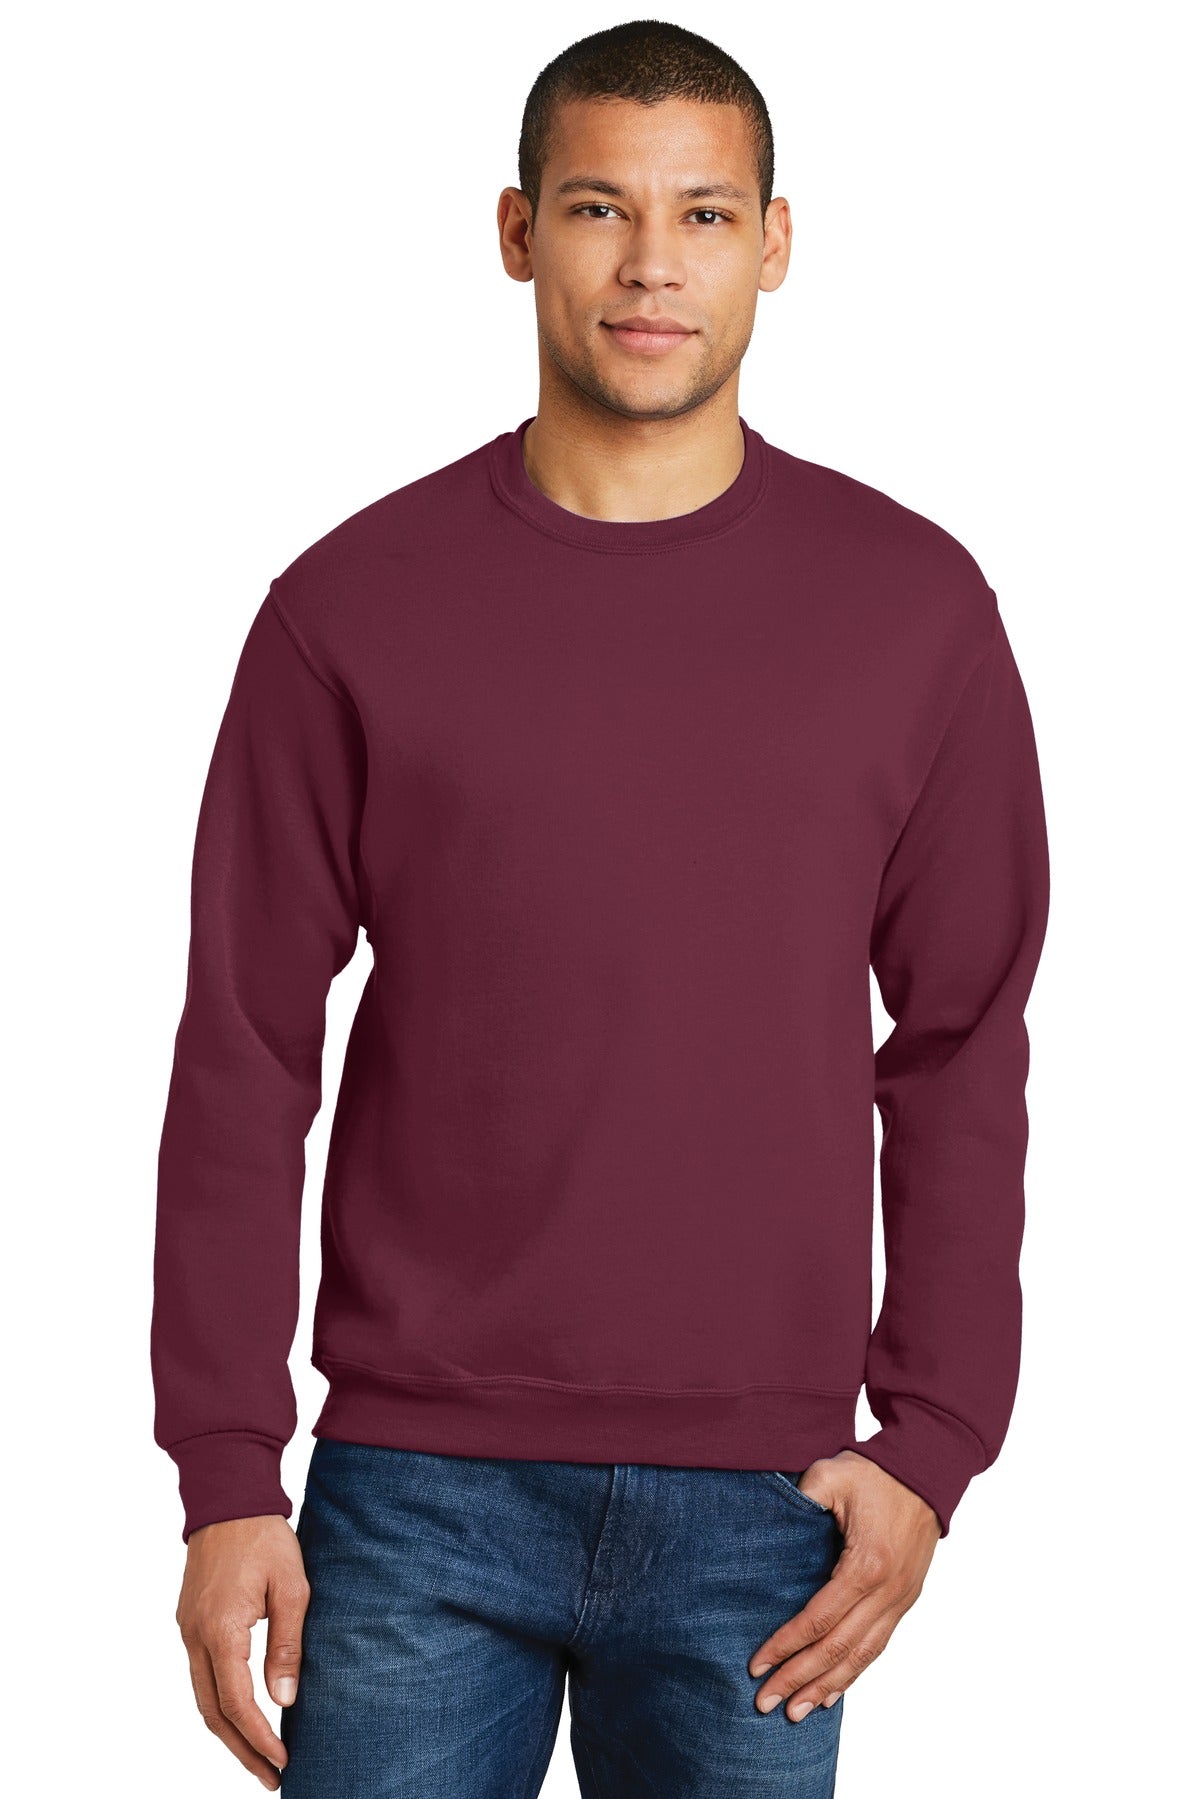 JERZEES® - NuBlend® Crewneck Sweatshirt. 562M [Maroon] - DFW Impression